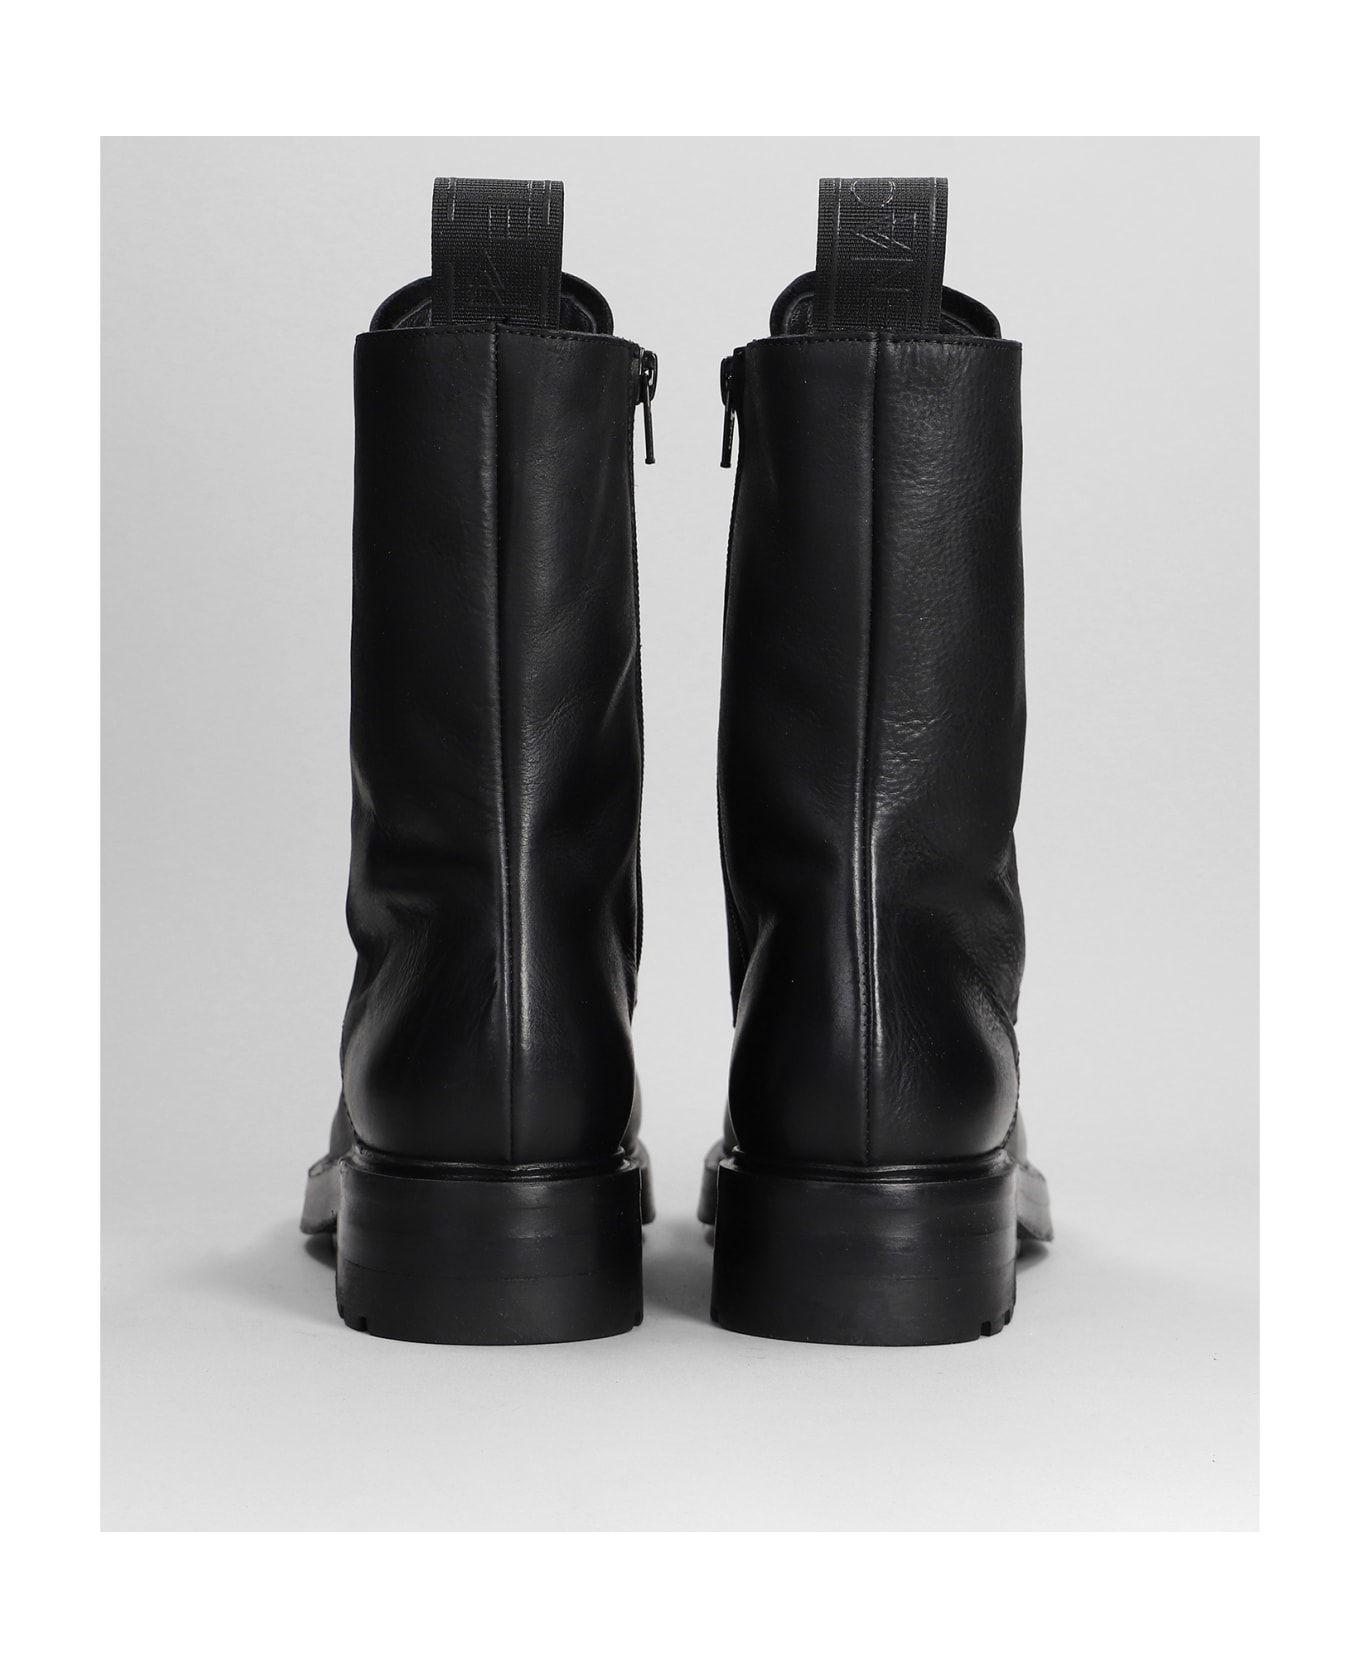 Elena Iachi Combat Boots In Black Leather - black